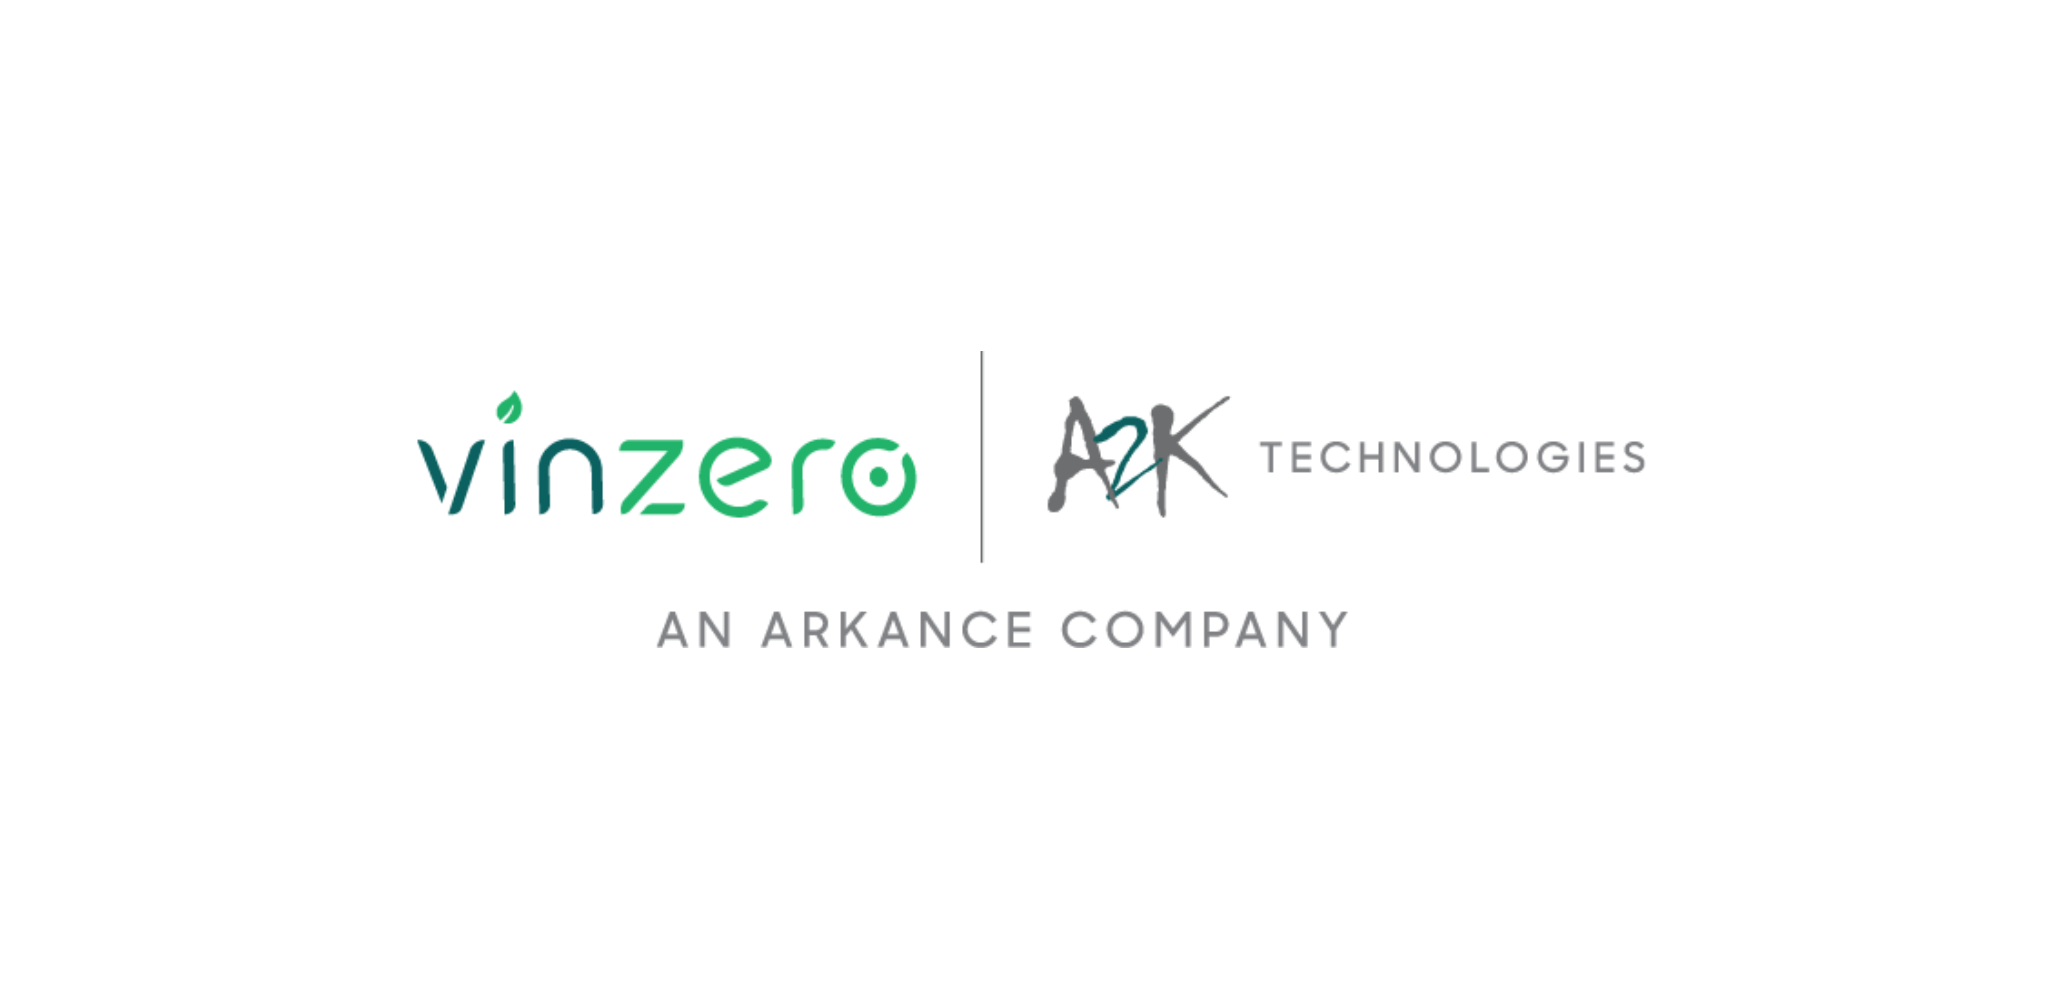 NZC Partners - wide - A2K Vinzero